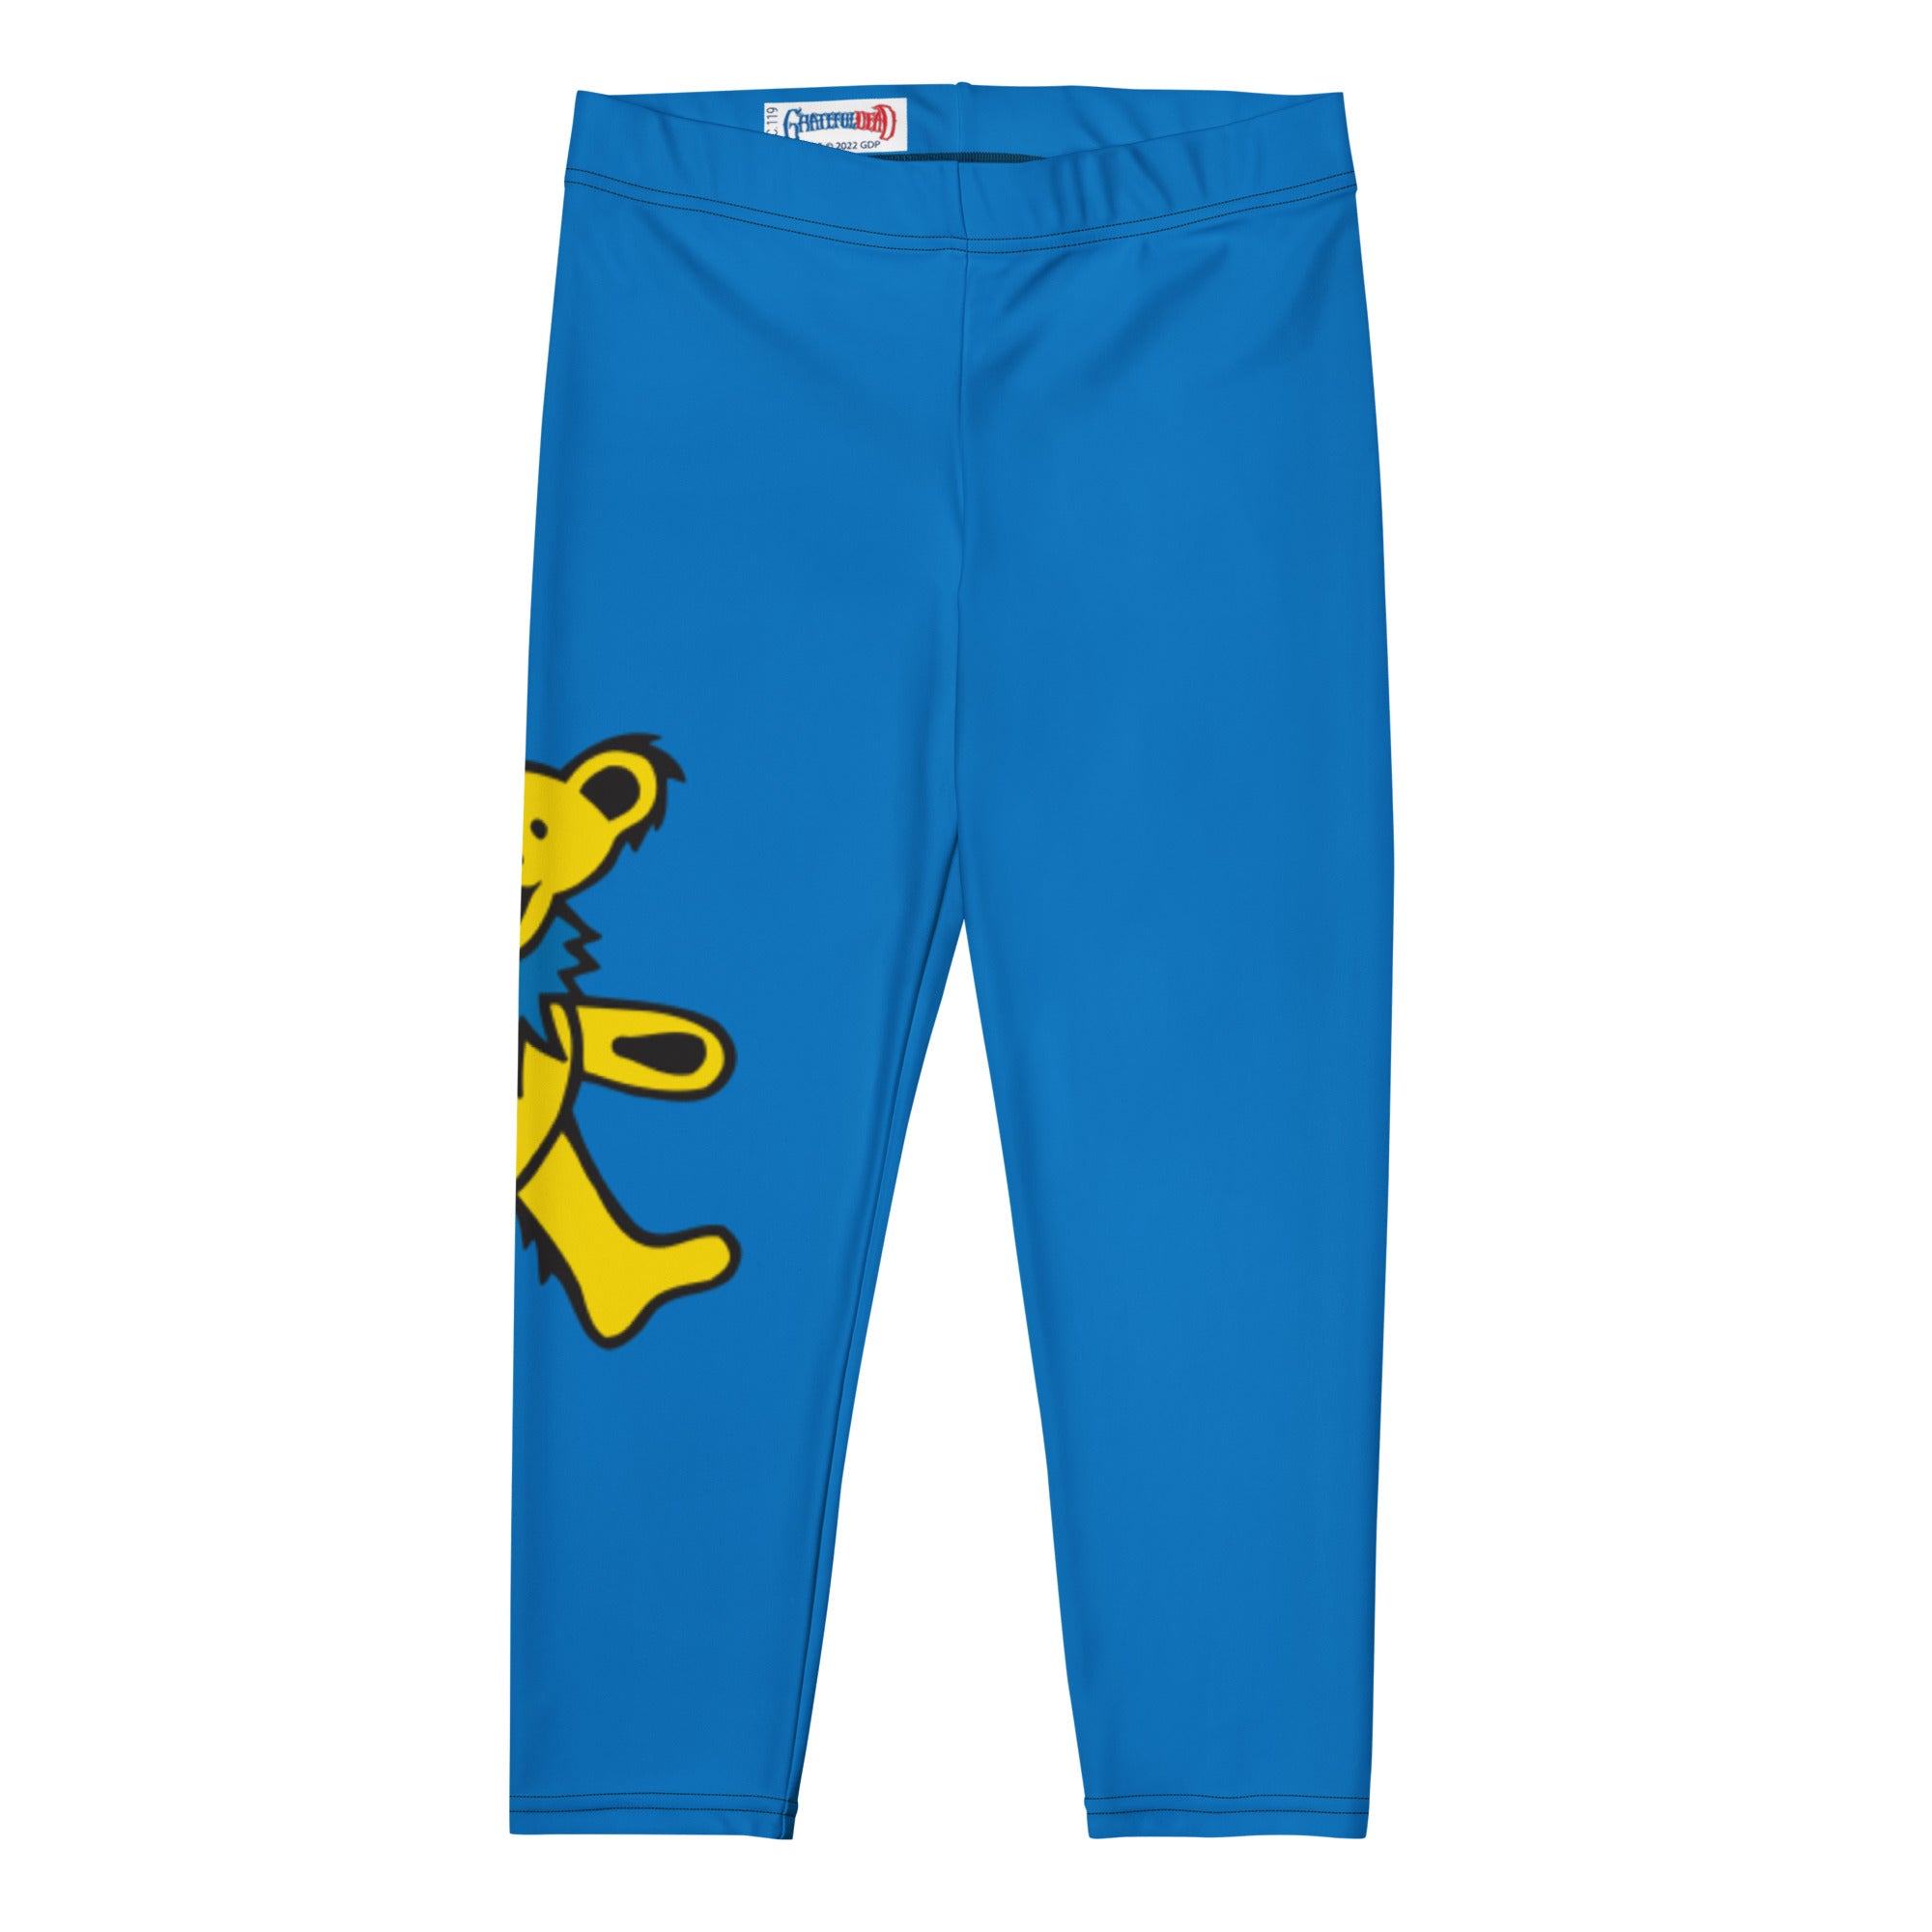 Electric Blue and Yellow Dancing Bears Capri Leggings - Section 119